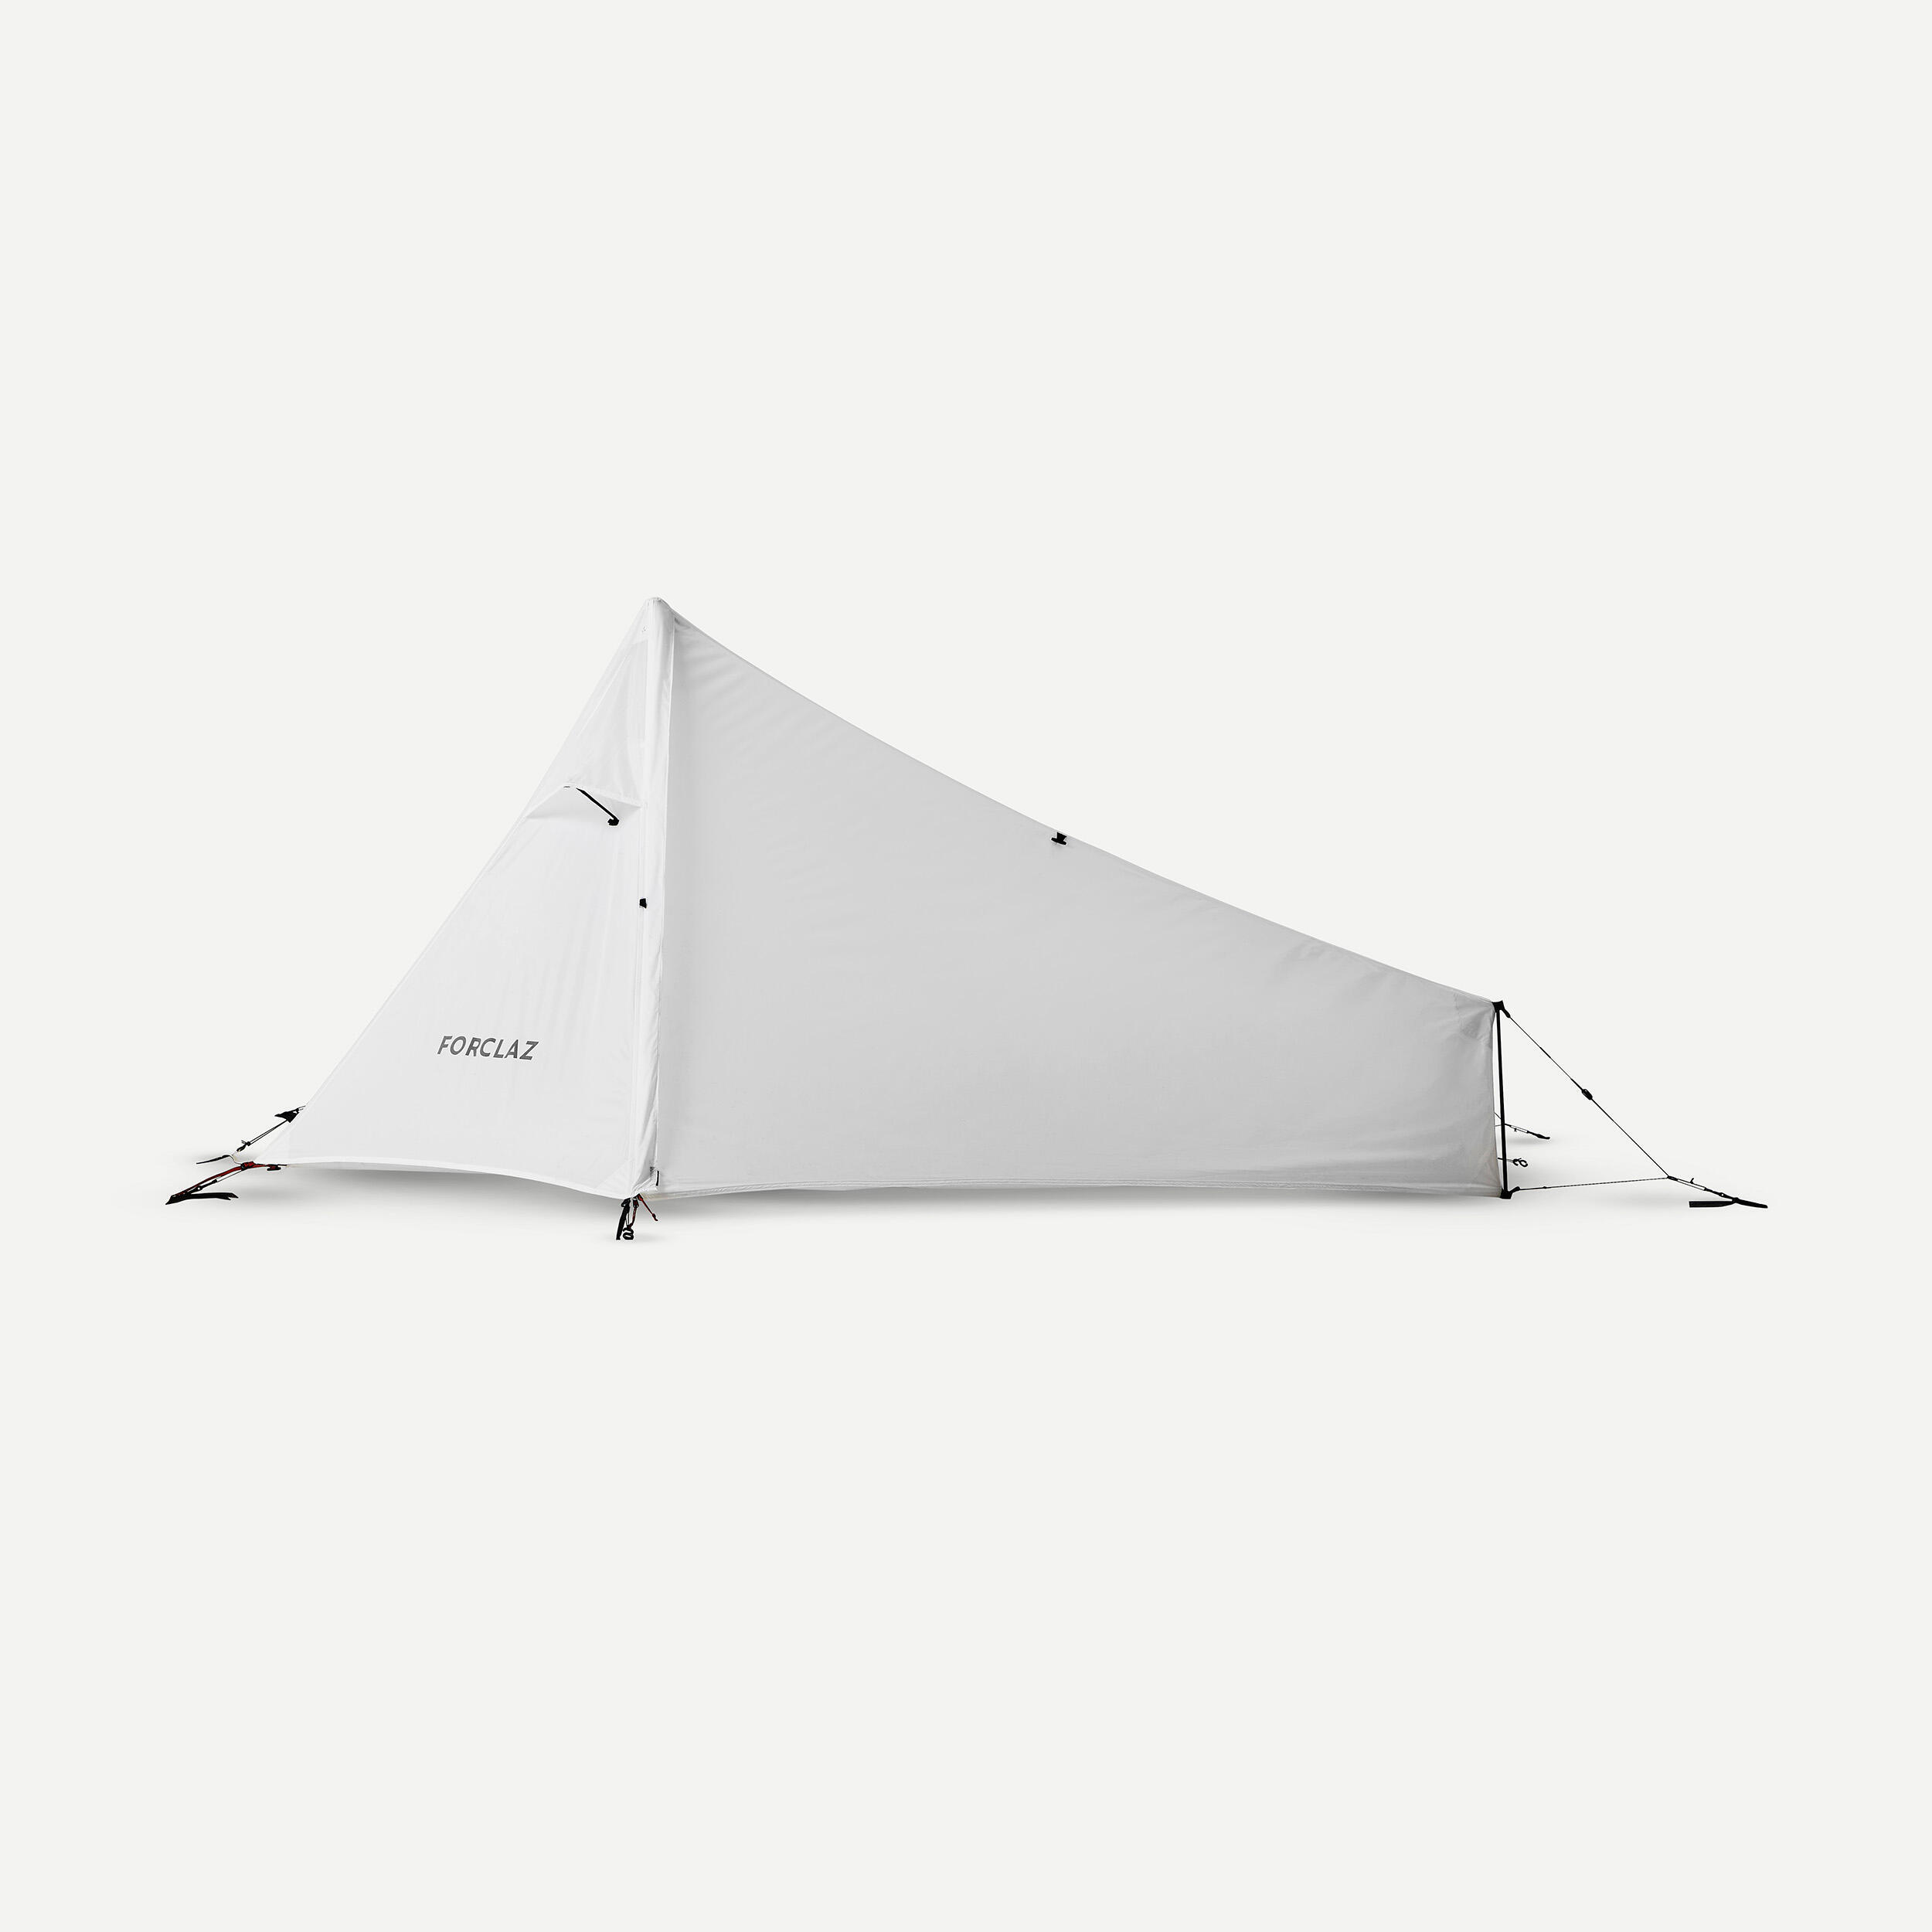 Trekking Tarp Tent - 2 person - MT900 v2 Minimal Editions - Undyed 4/11